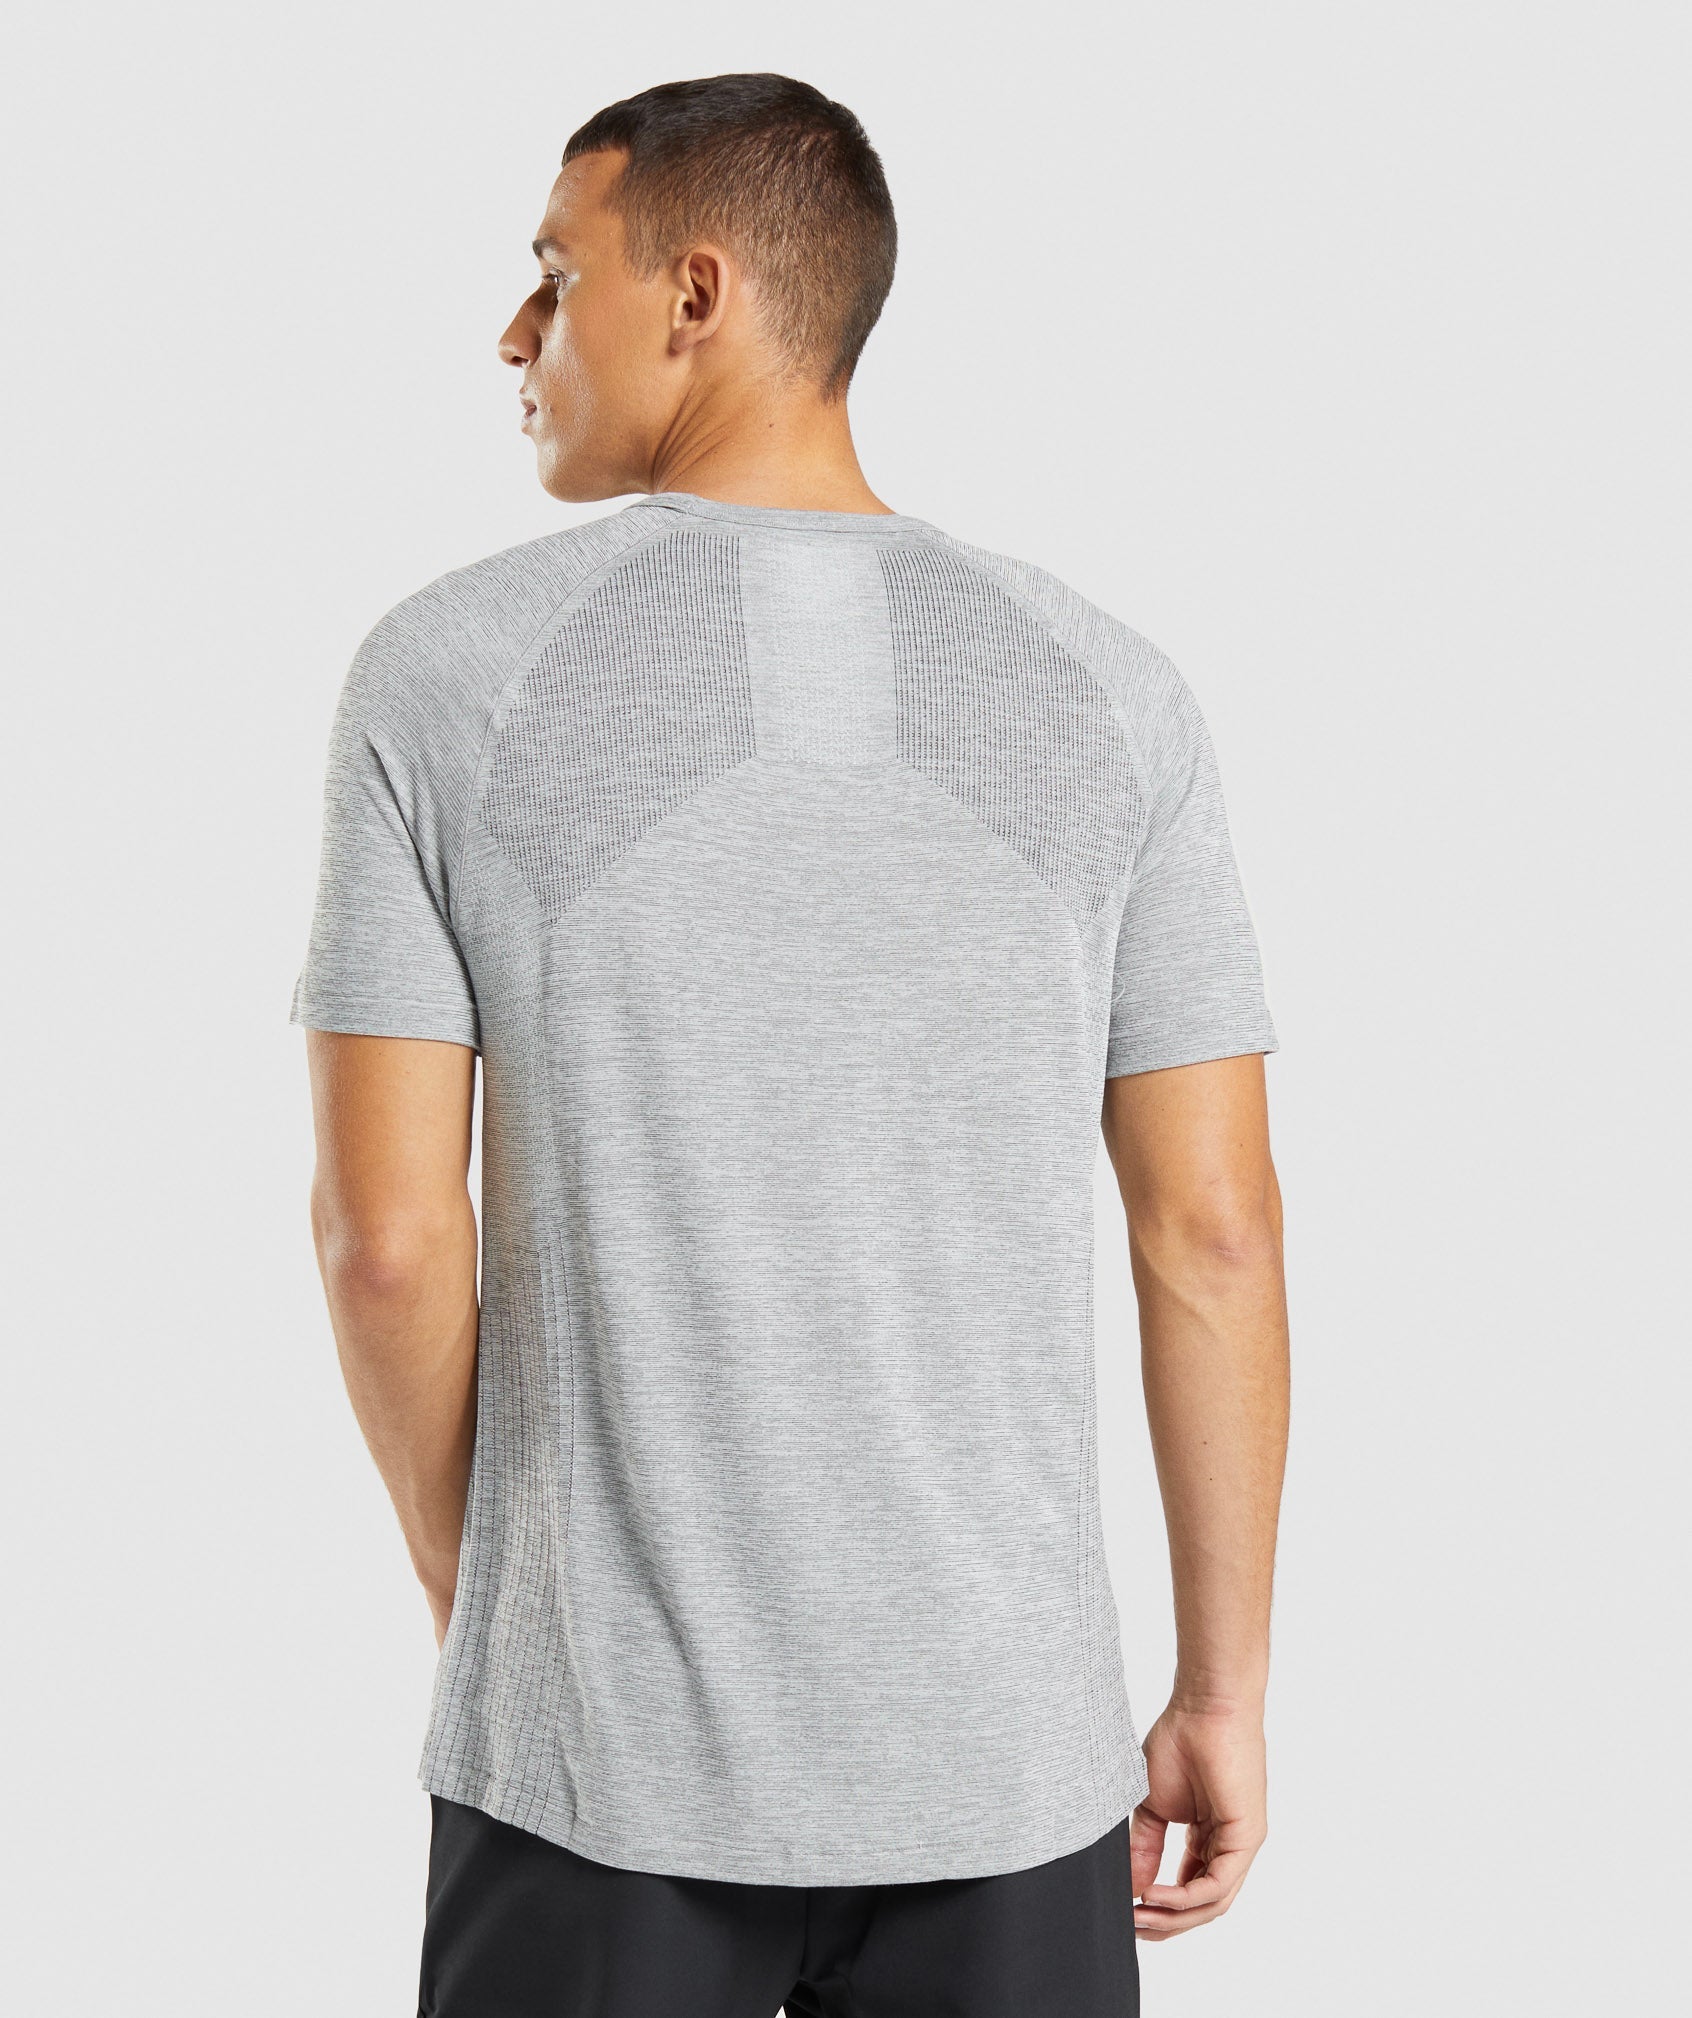 Retake Seamless T-Shirt in Light Grey/Black Marl